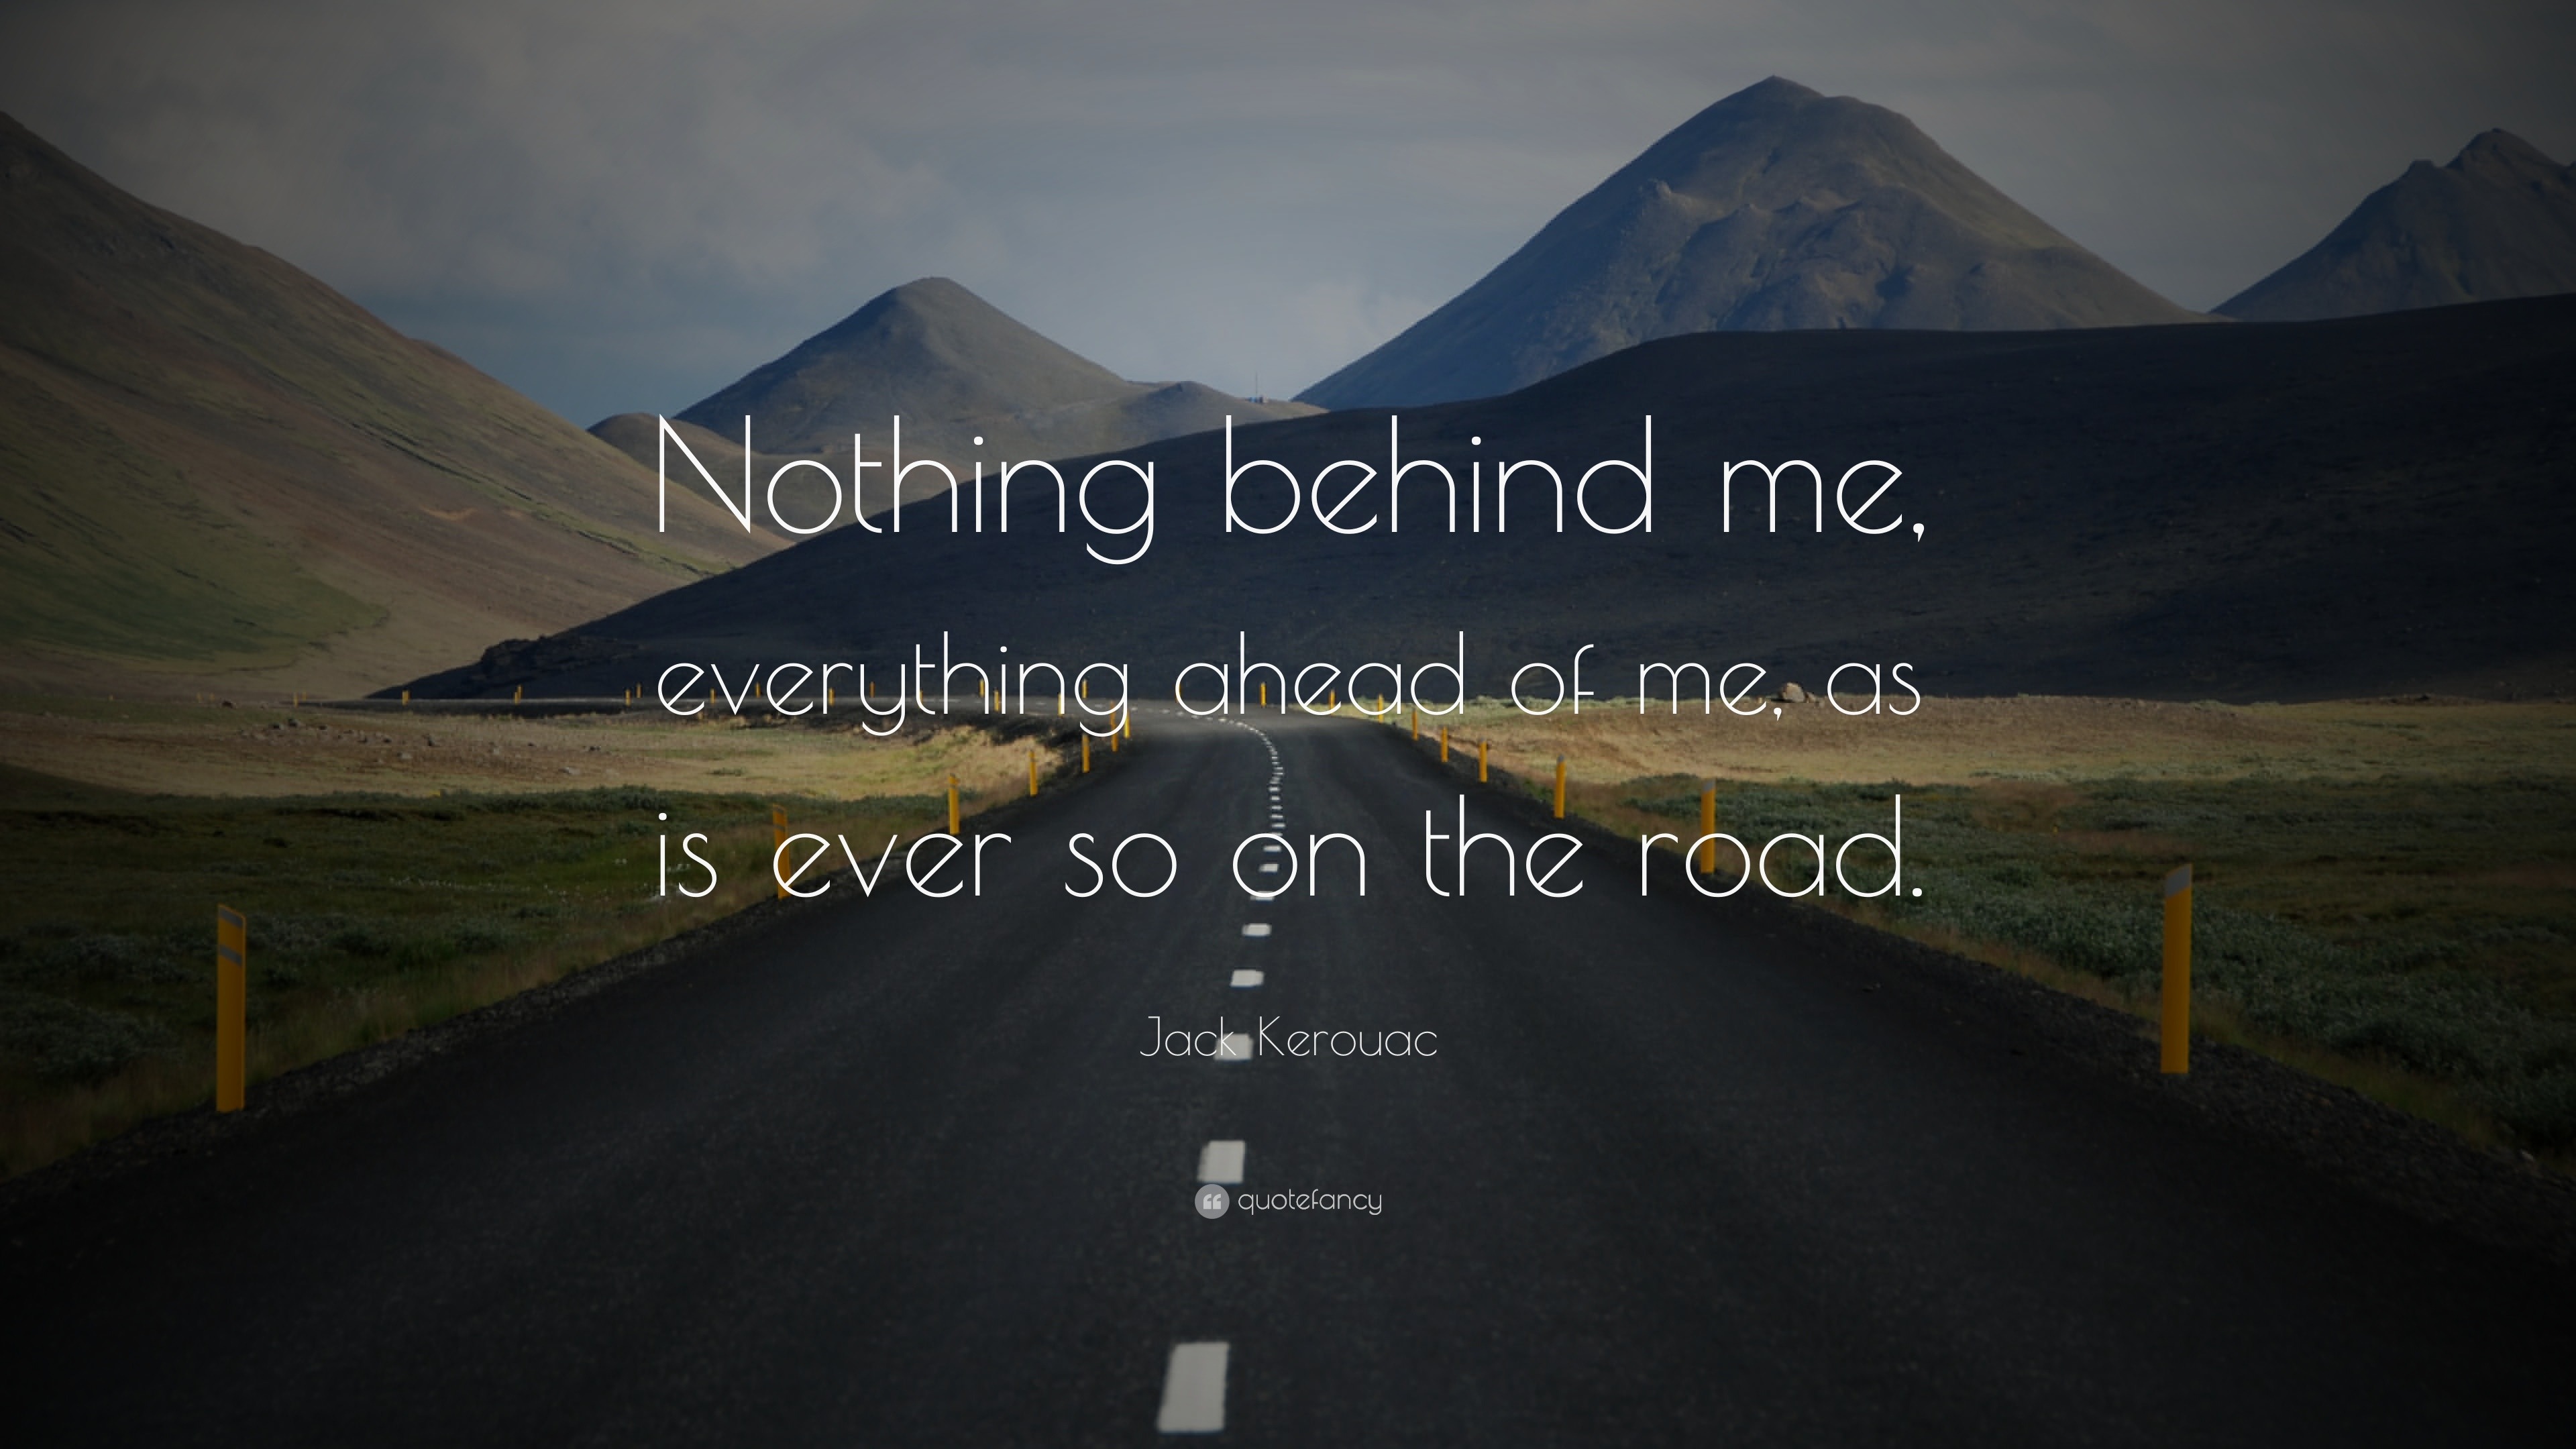 Jack Kerouac Quote: “Nothing behind me, everything ahead of me, as is